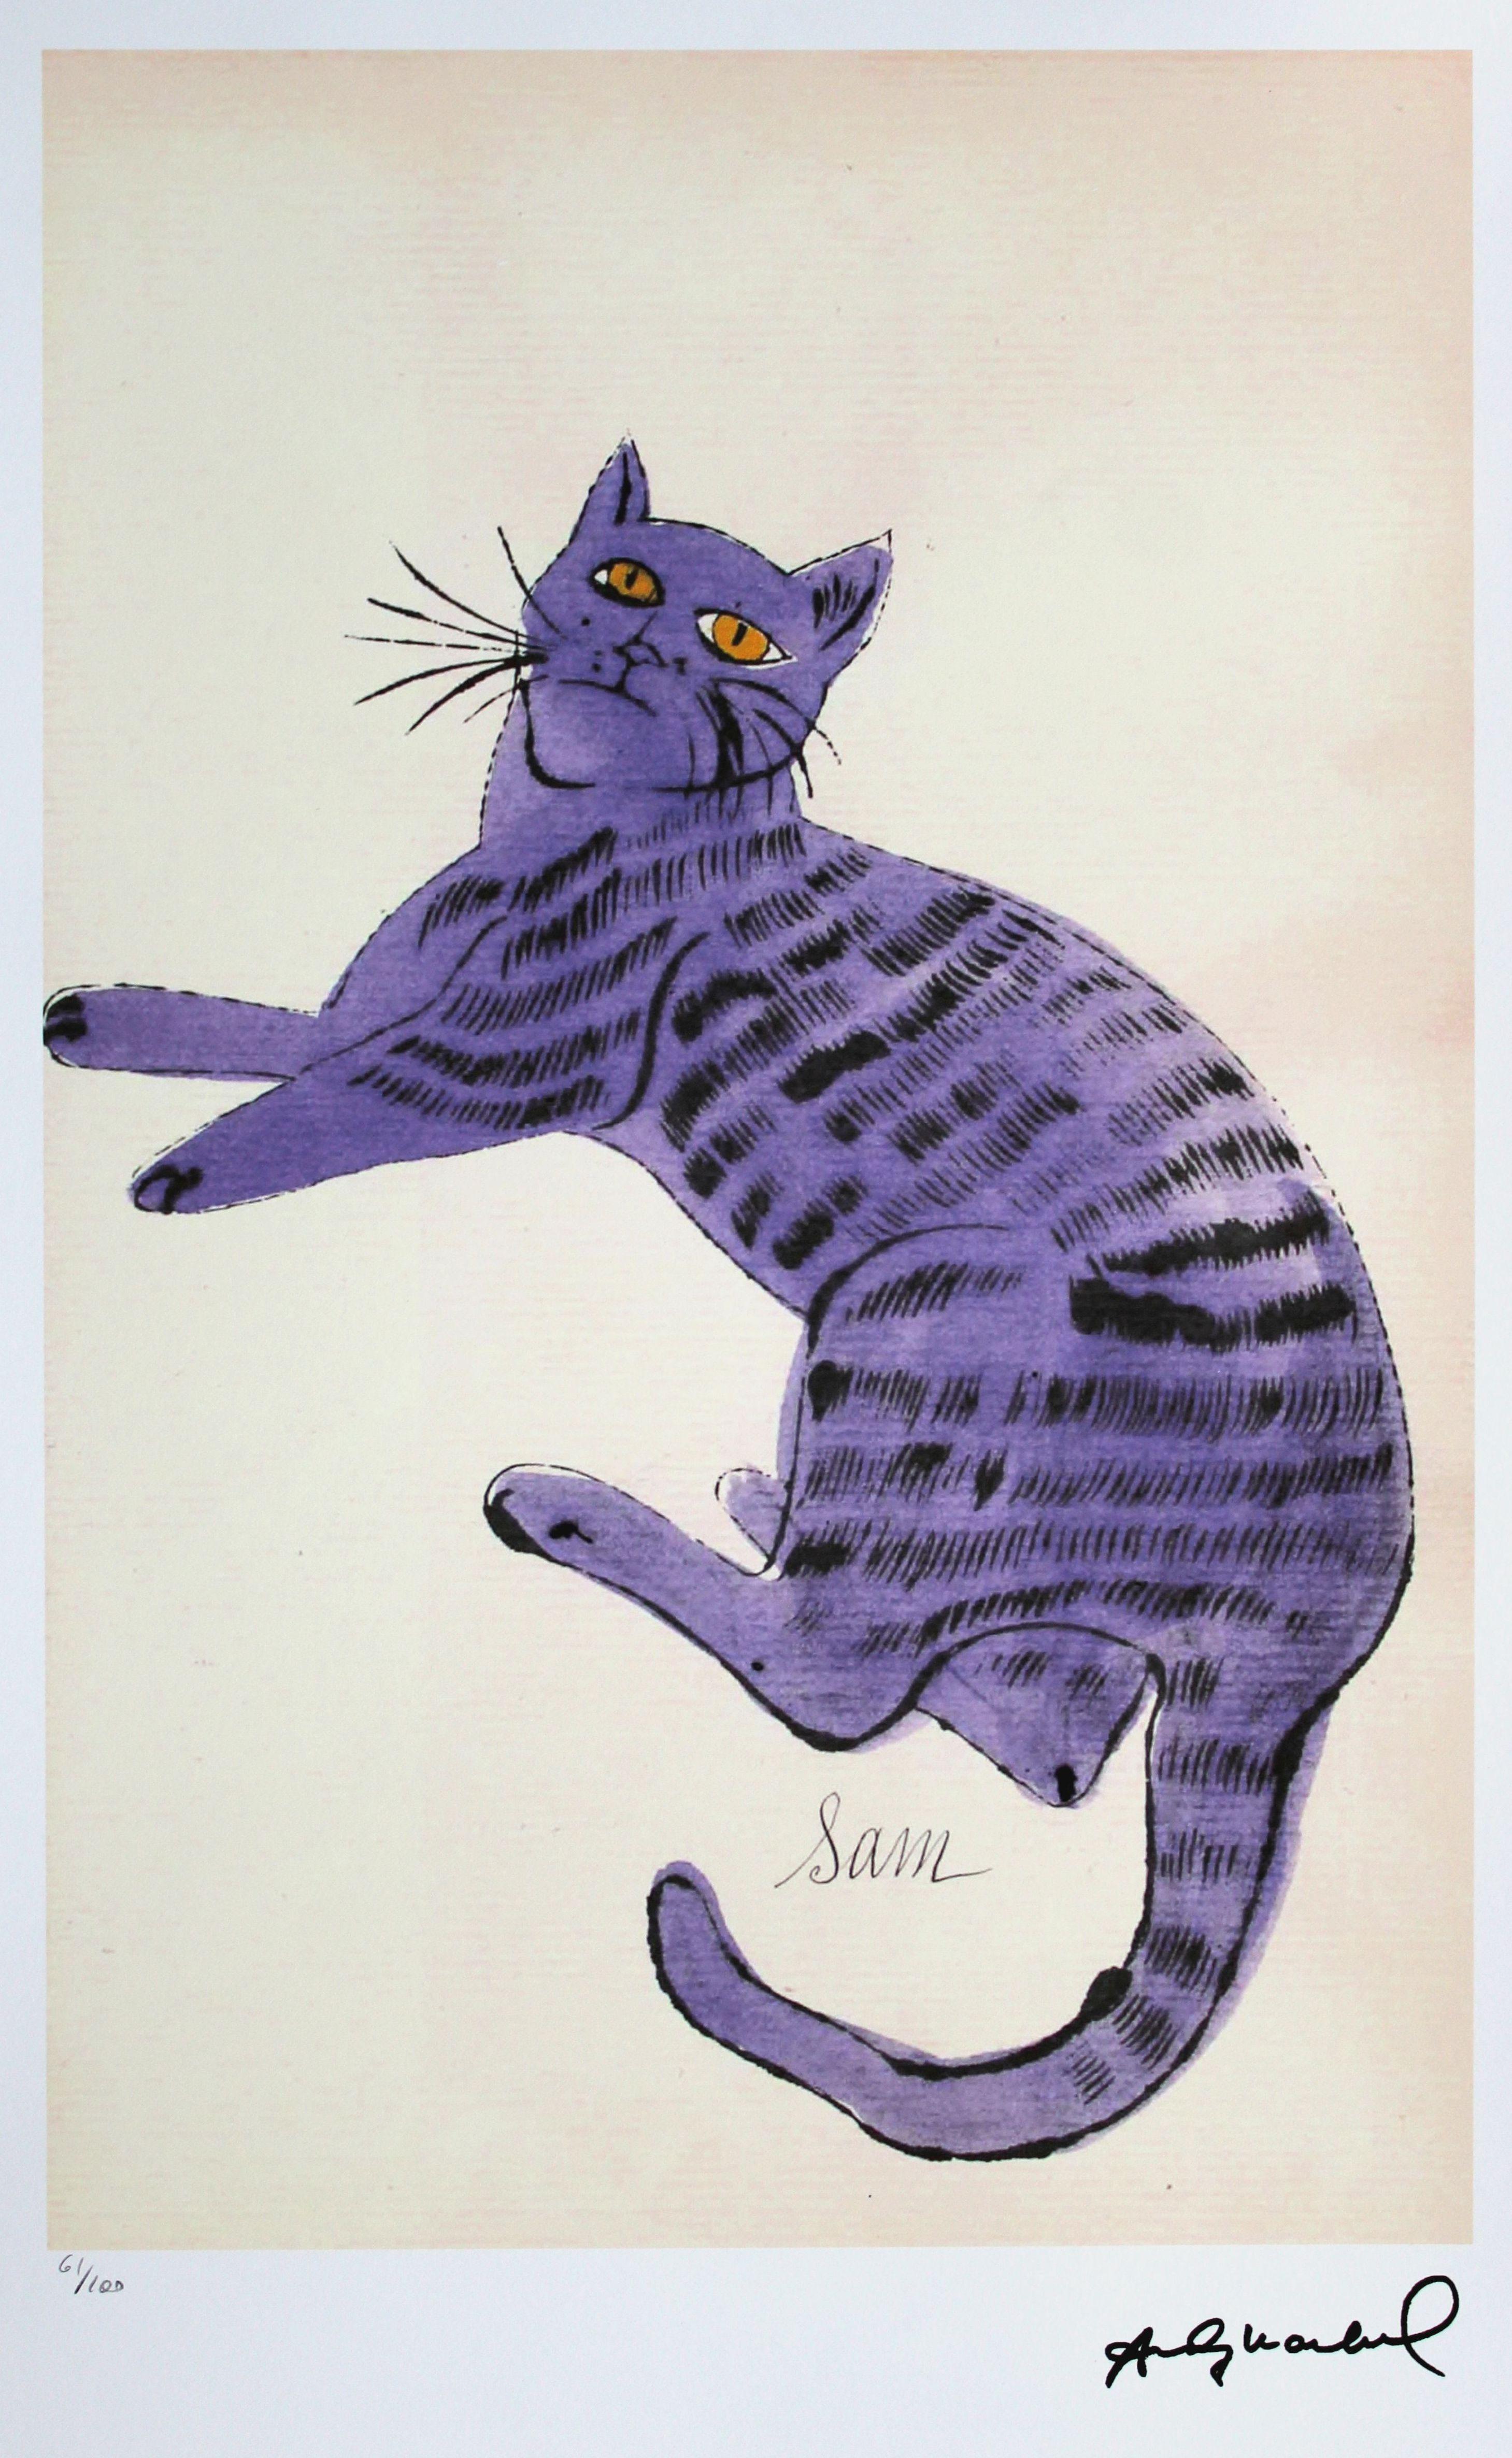 Andy Warhol Animal Print - Lunar cat  61/100. Lithography, offset printing, imprint size 44x28, 5 cm